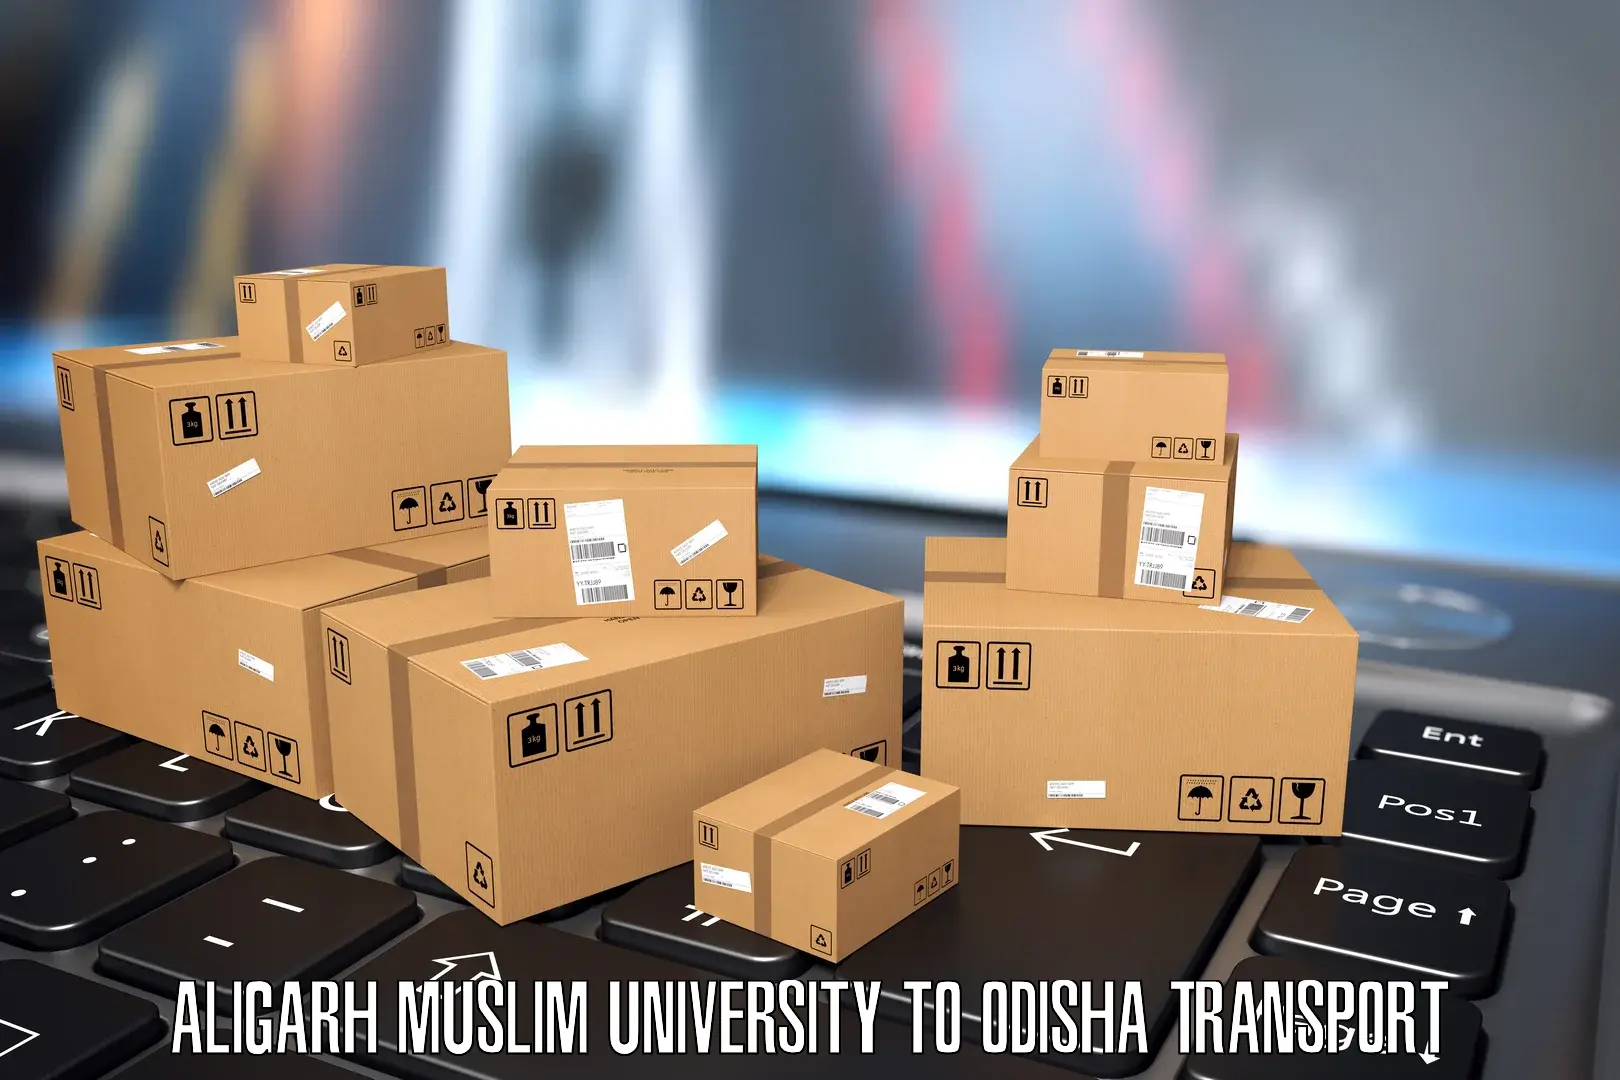 Shipping partner Aligarh Muslim University to Chandbali